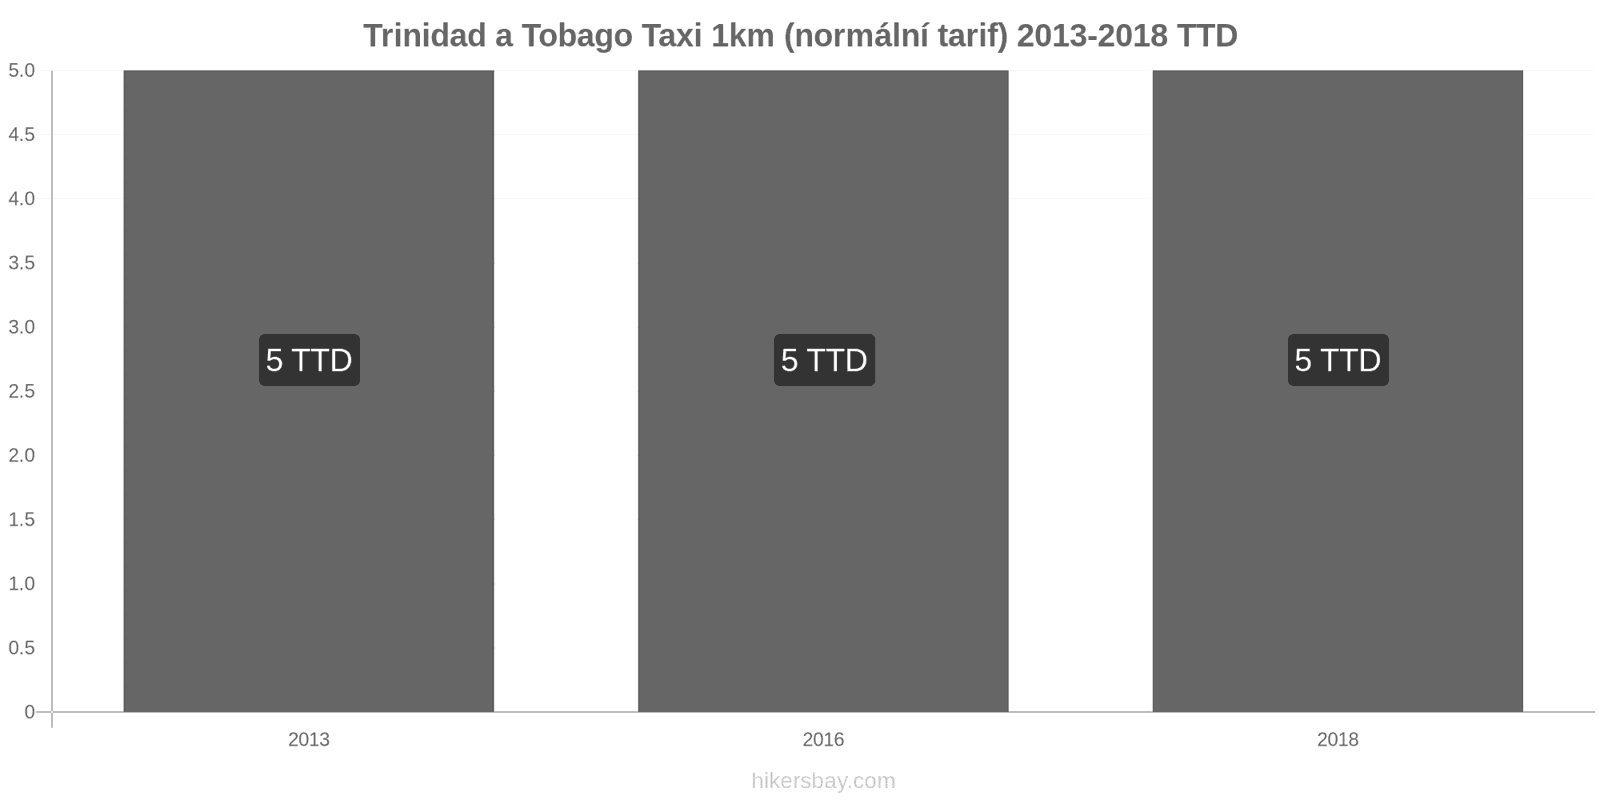 Trinidad a Tobago změny cen Taxi 1km (normální tarif) hikersbay.com